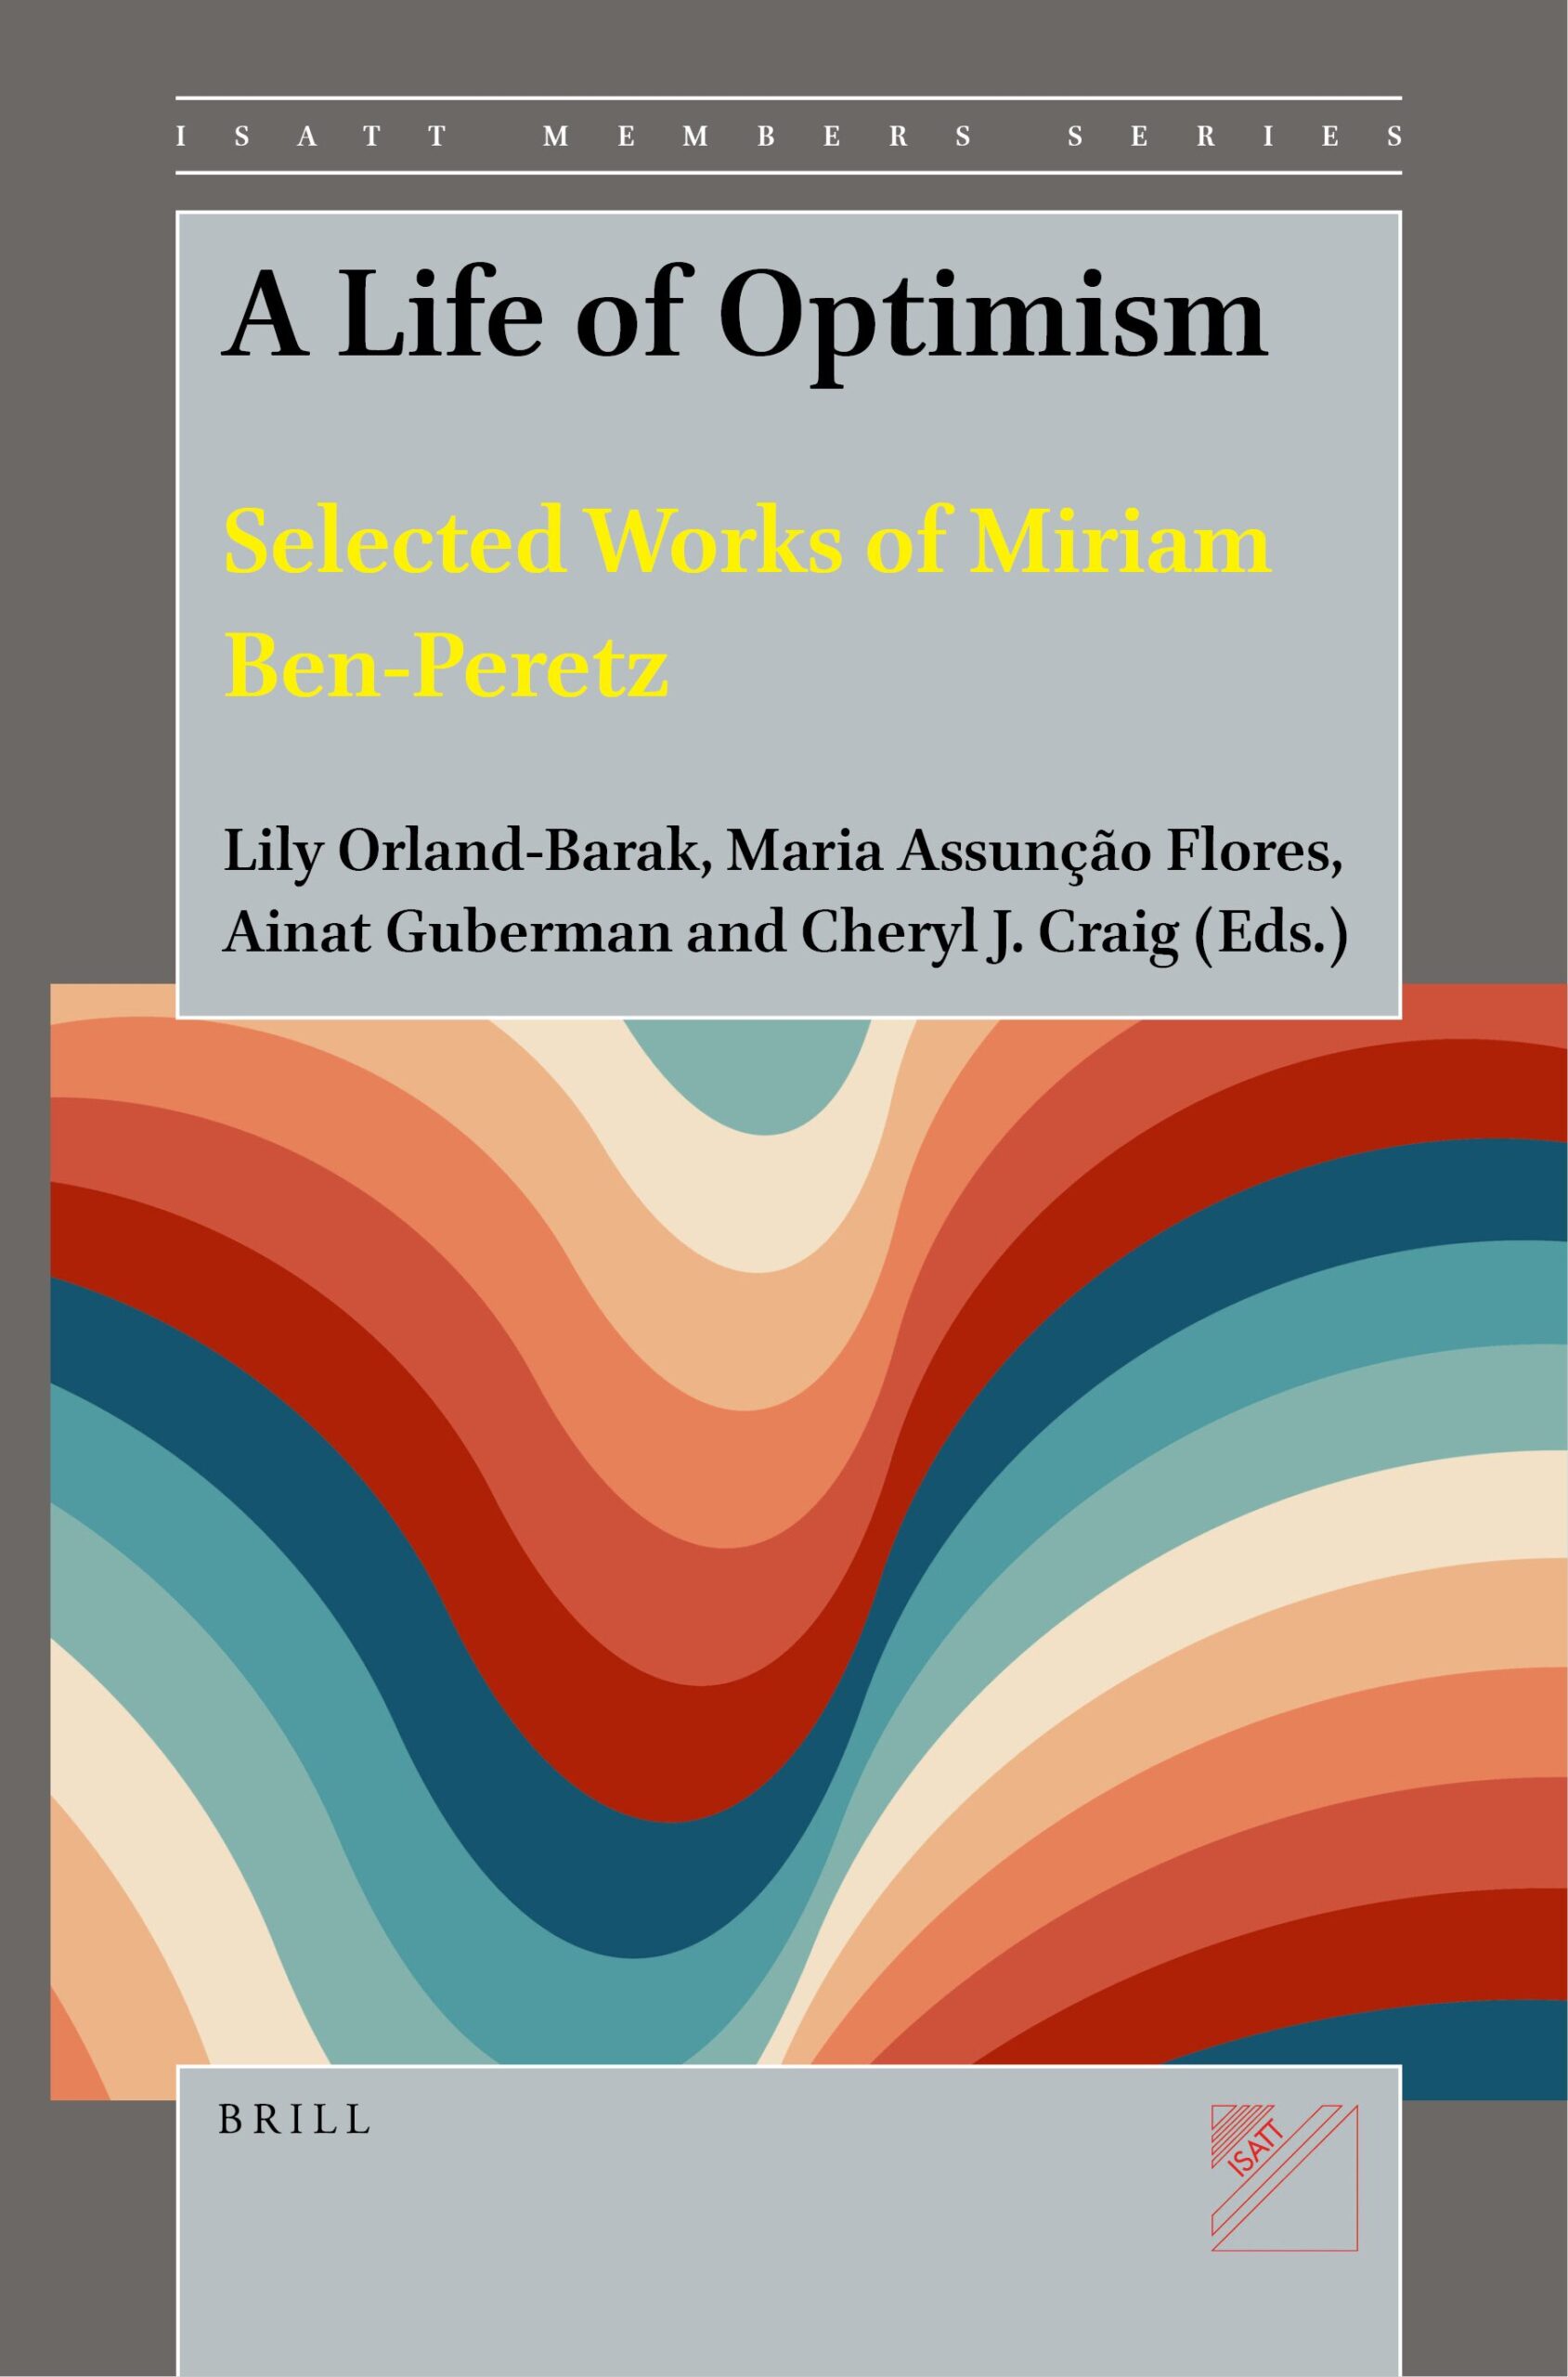 A Life of Optimism Selected Works of Miriam Ben-Peretz (1)